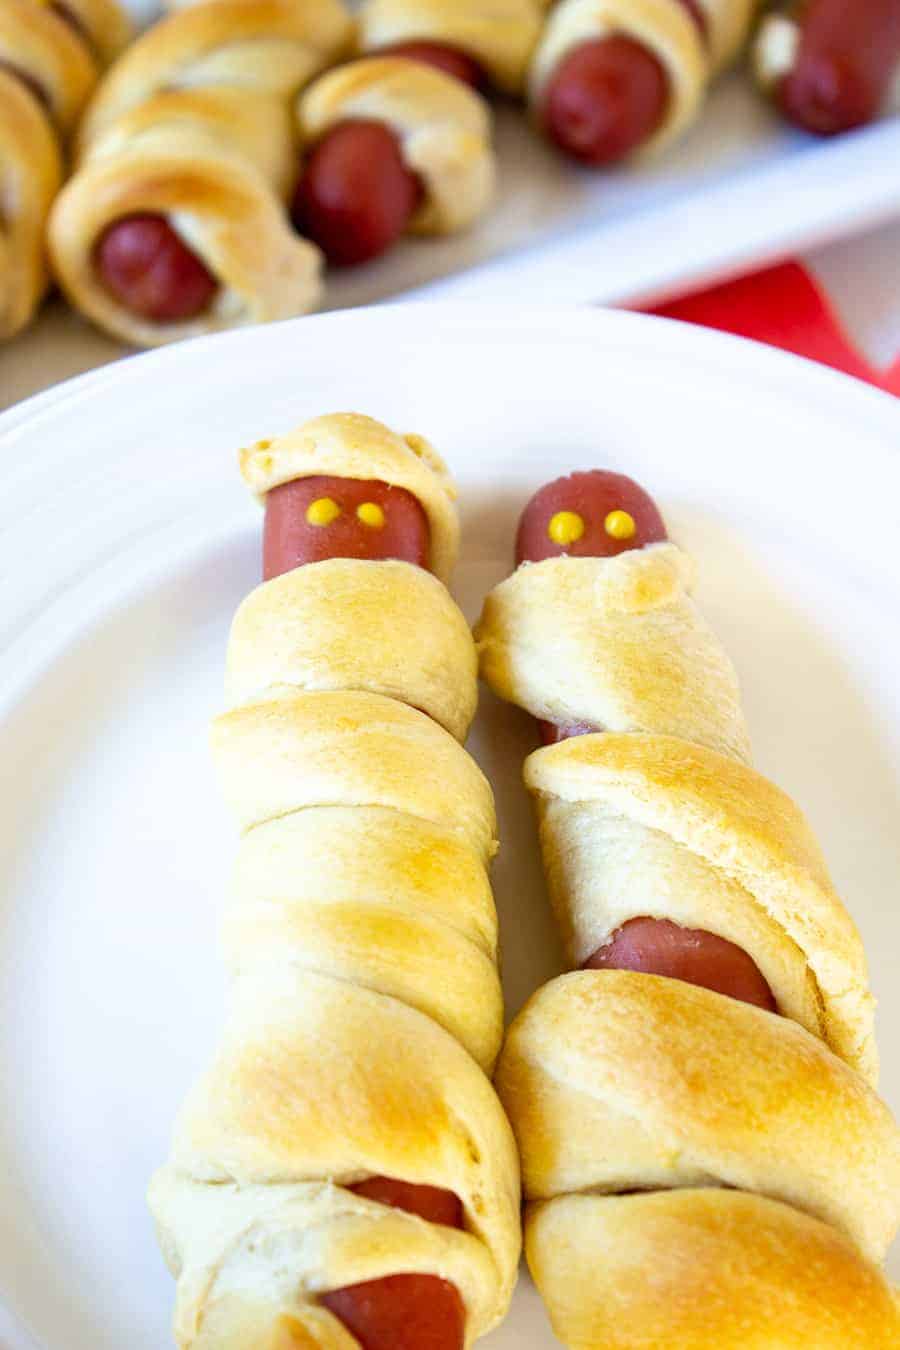 Hot dog mummies on a white plate.